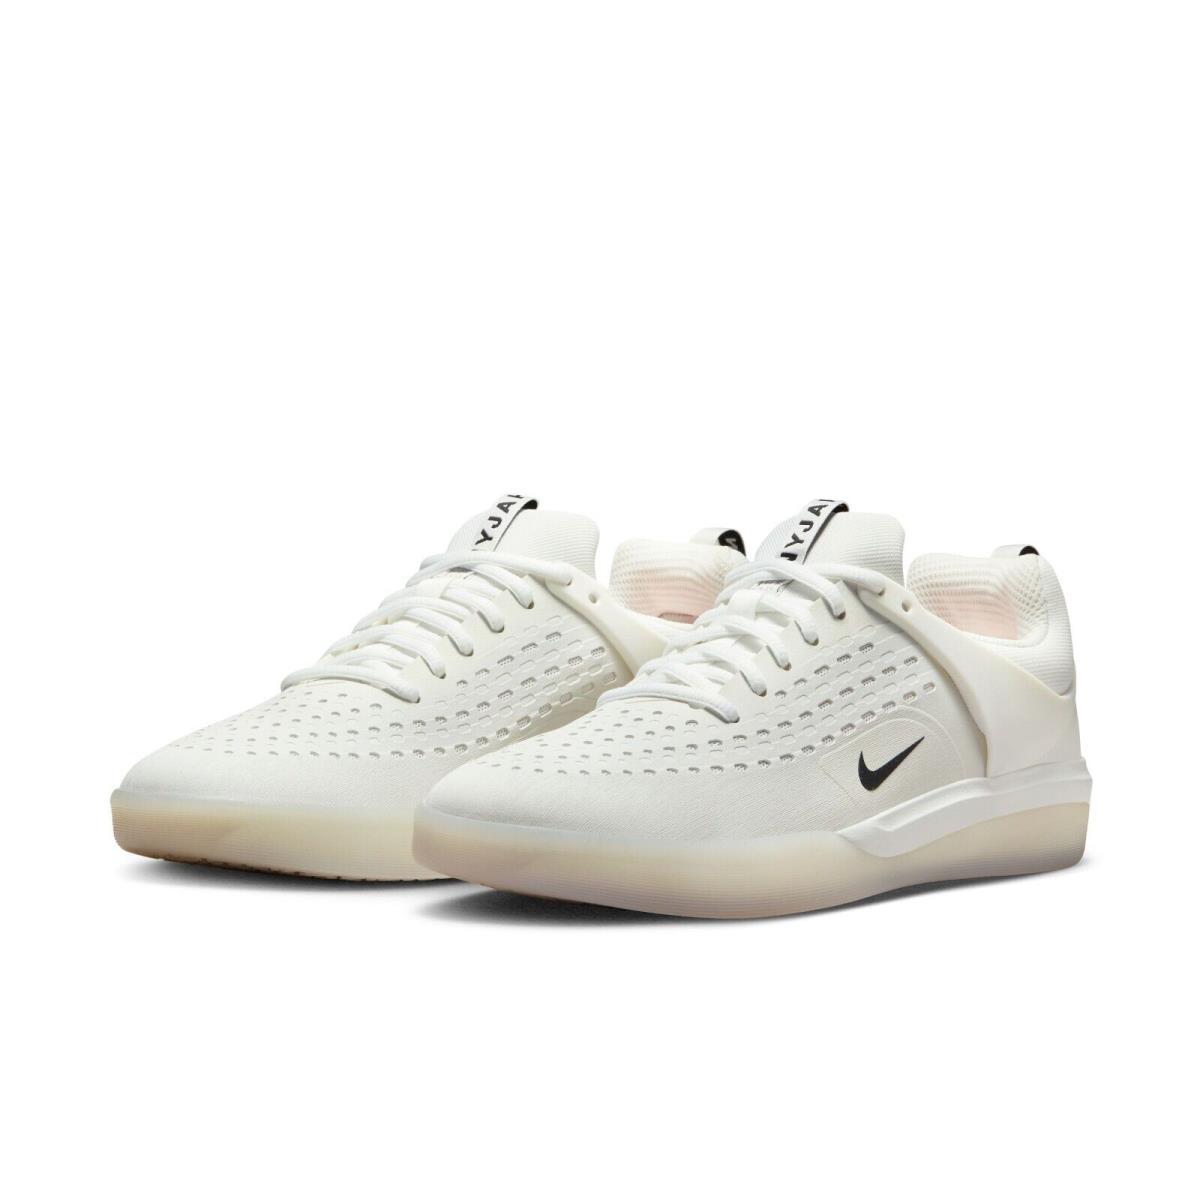 Nike SB Nyjah 3 Shoes - Summit White/black - Sizes 8.5-12 - White